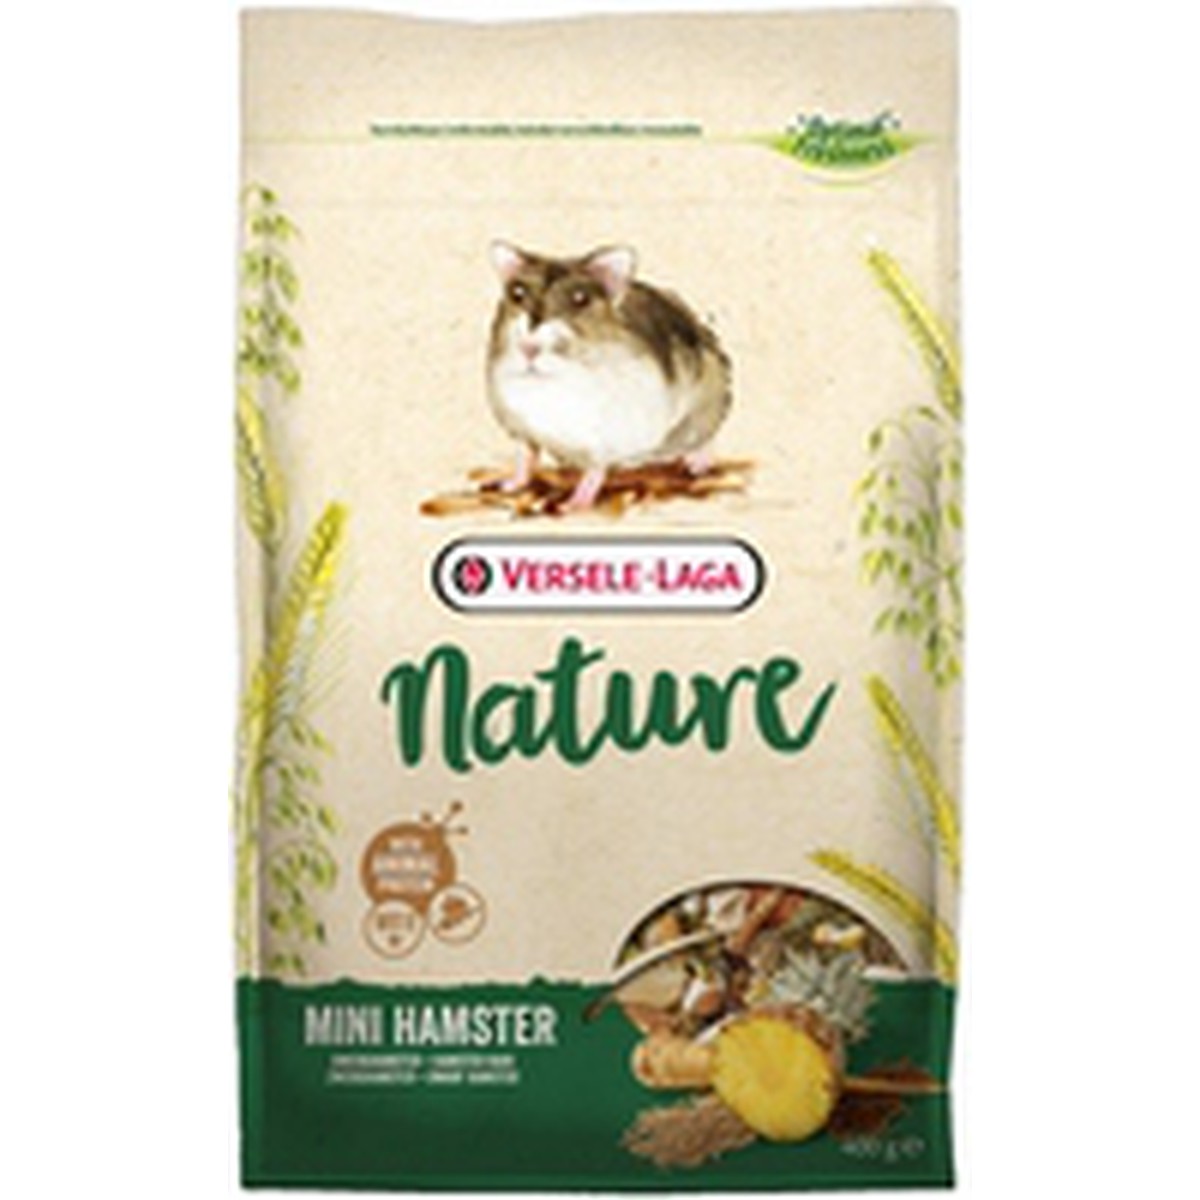   Versele-Laga Mini Hamster Nature, 400 g  400g